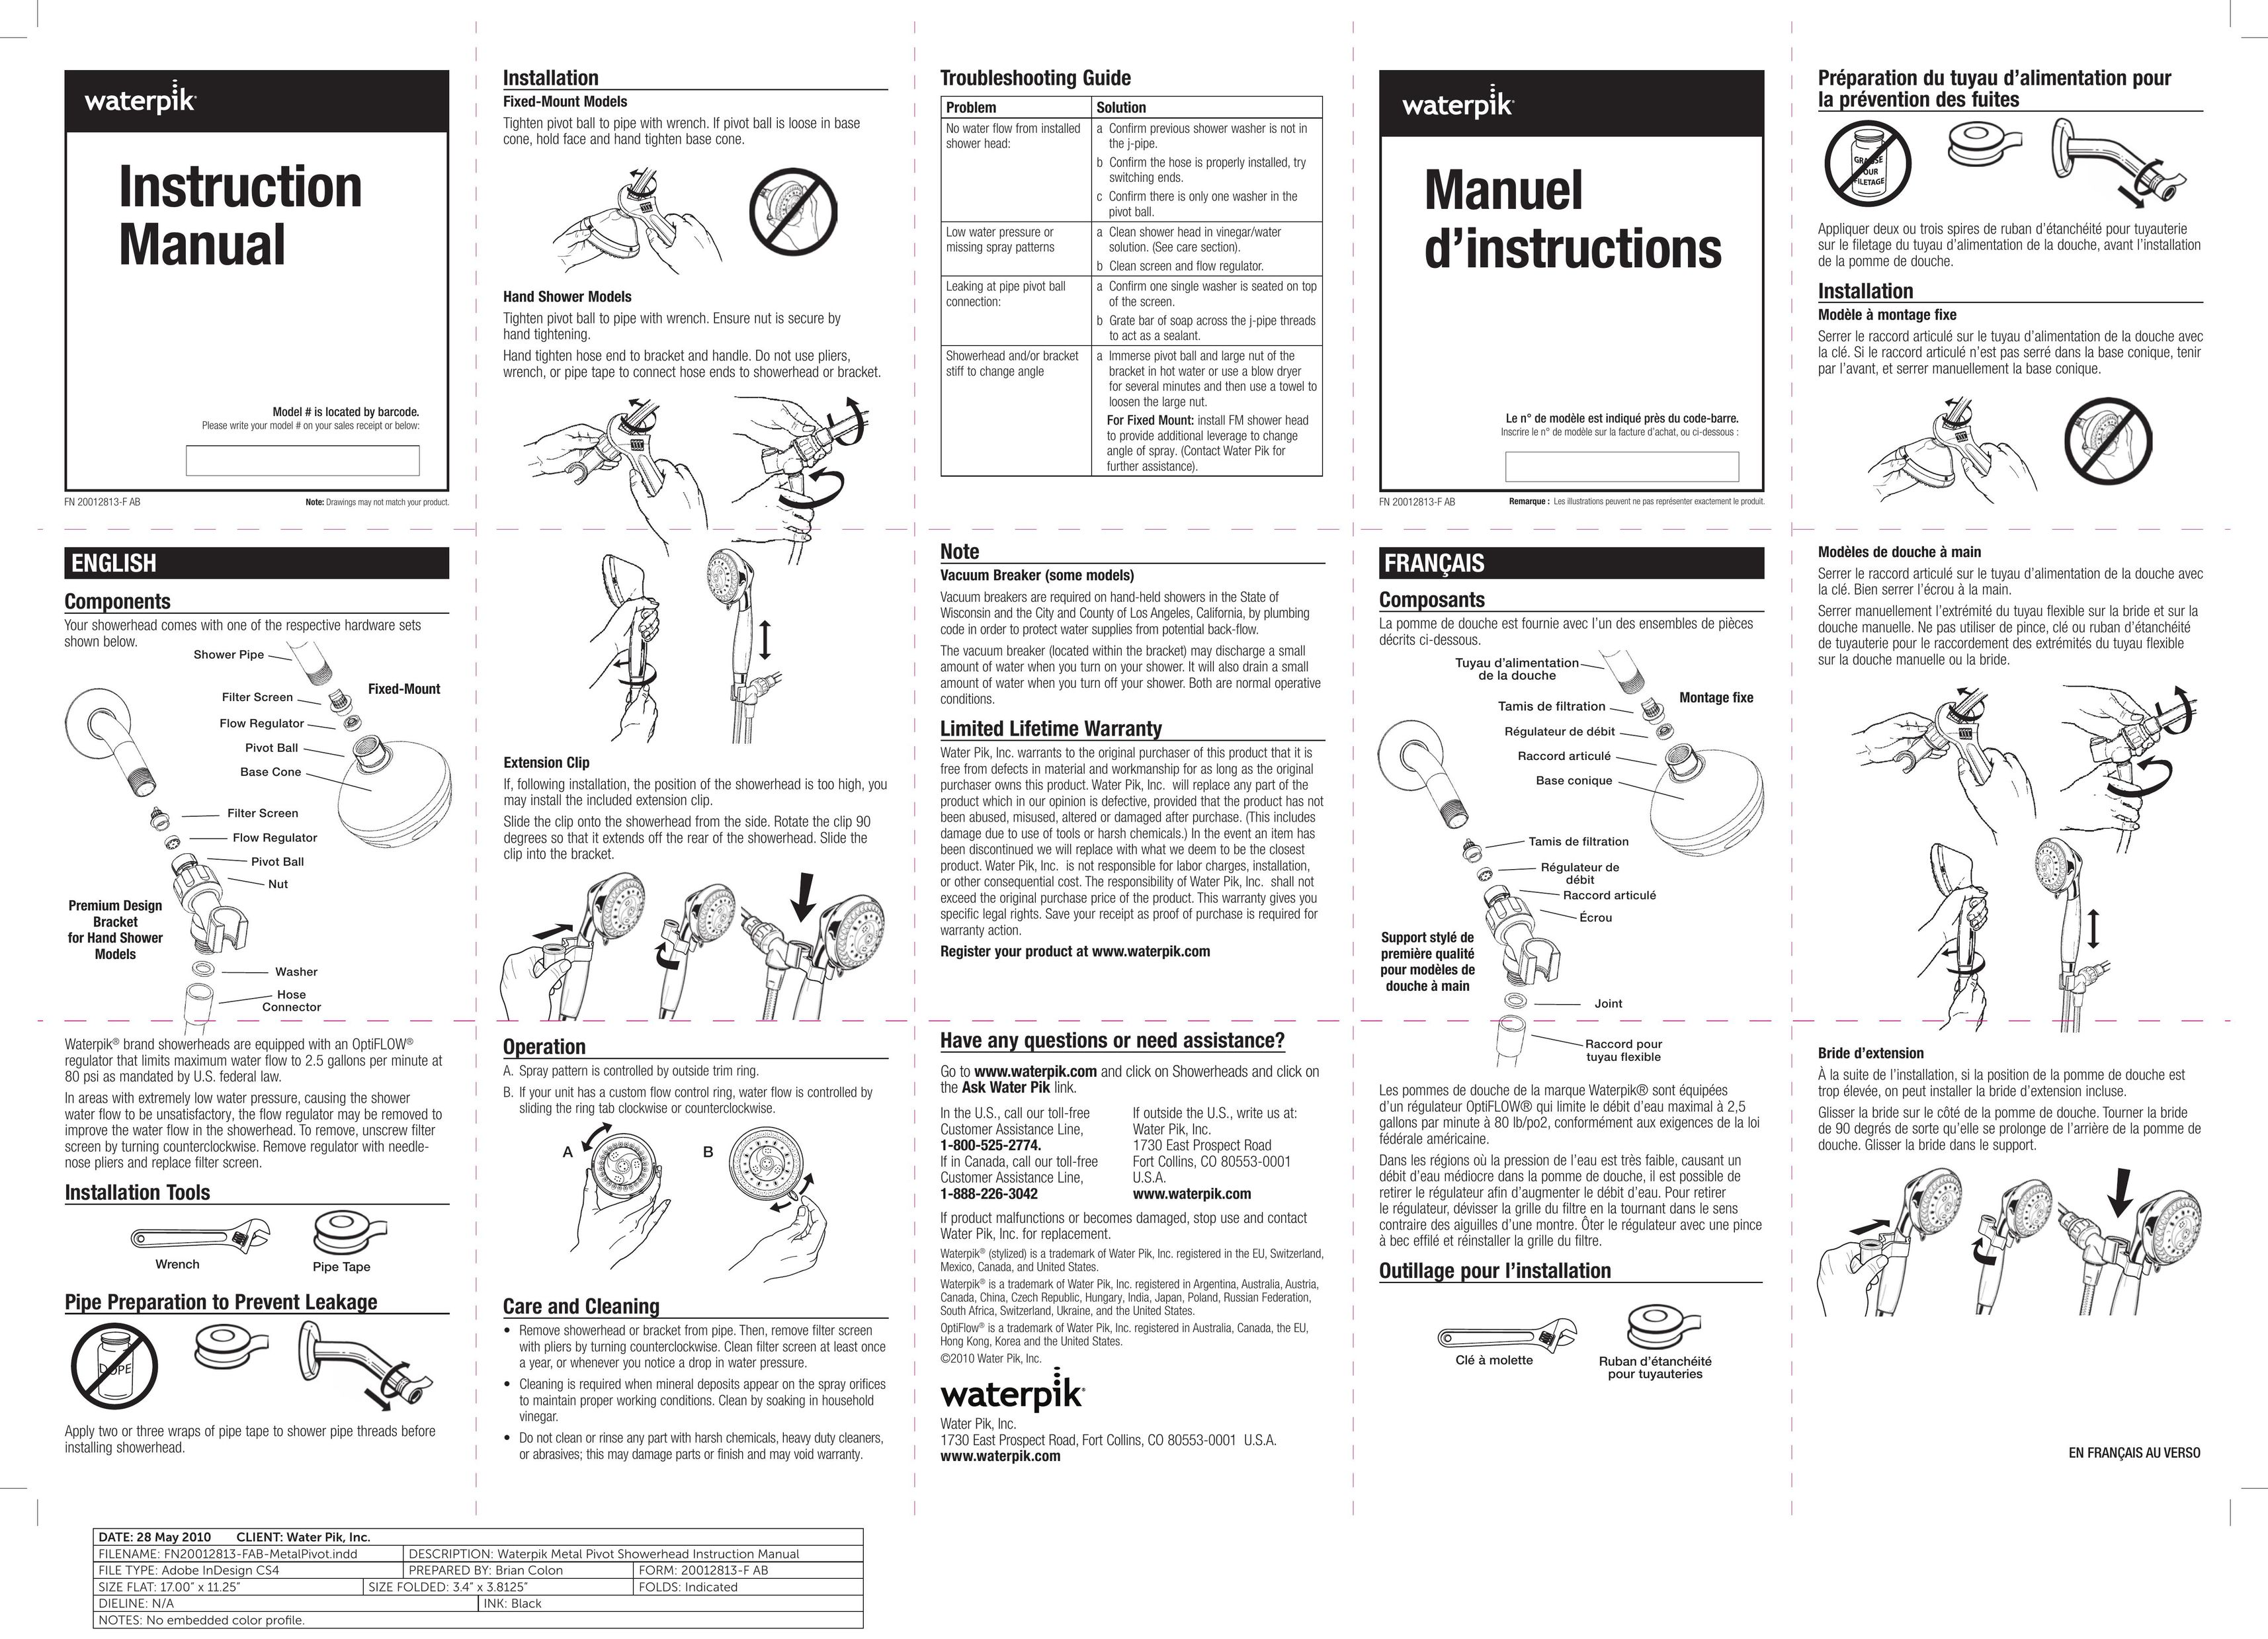 Waterpik Technologies FN 20012813-F AB Plumbing Product User Manual